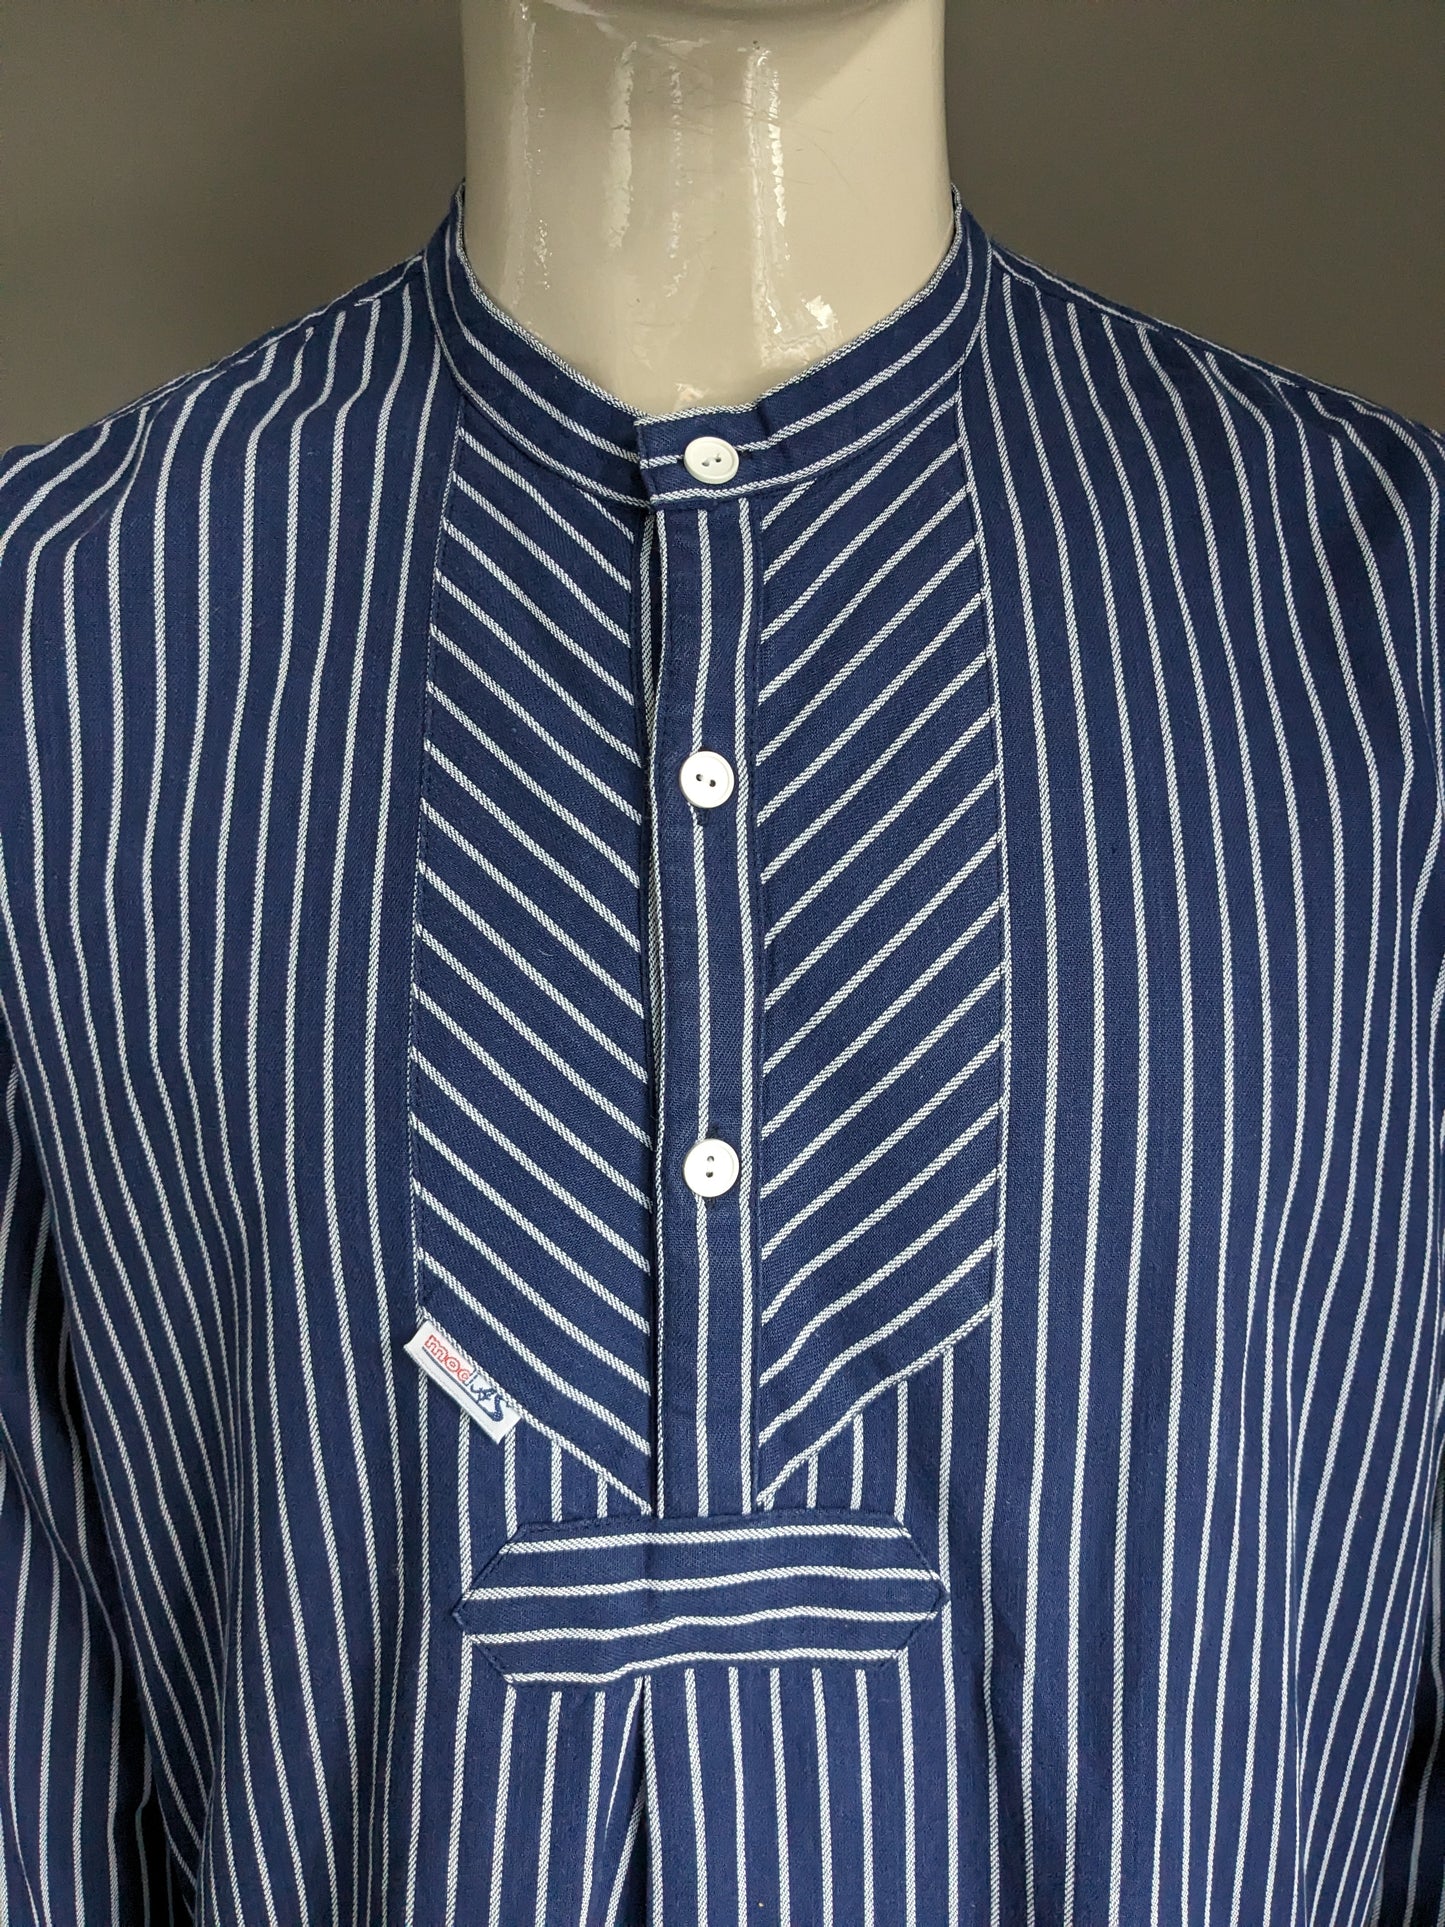 Vintage Modas polo trui / overhemd. Opstaande / farmers / Mao kraag. Blauw wit gestreept. Maat XL.